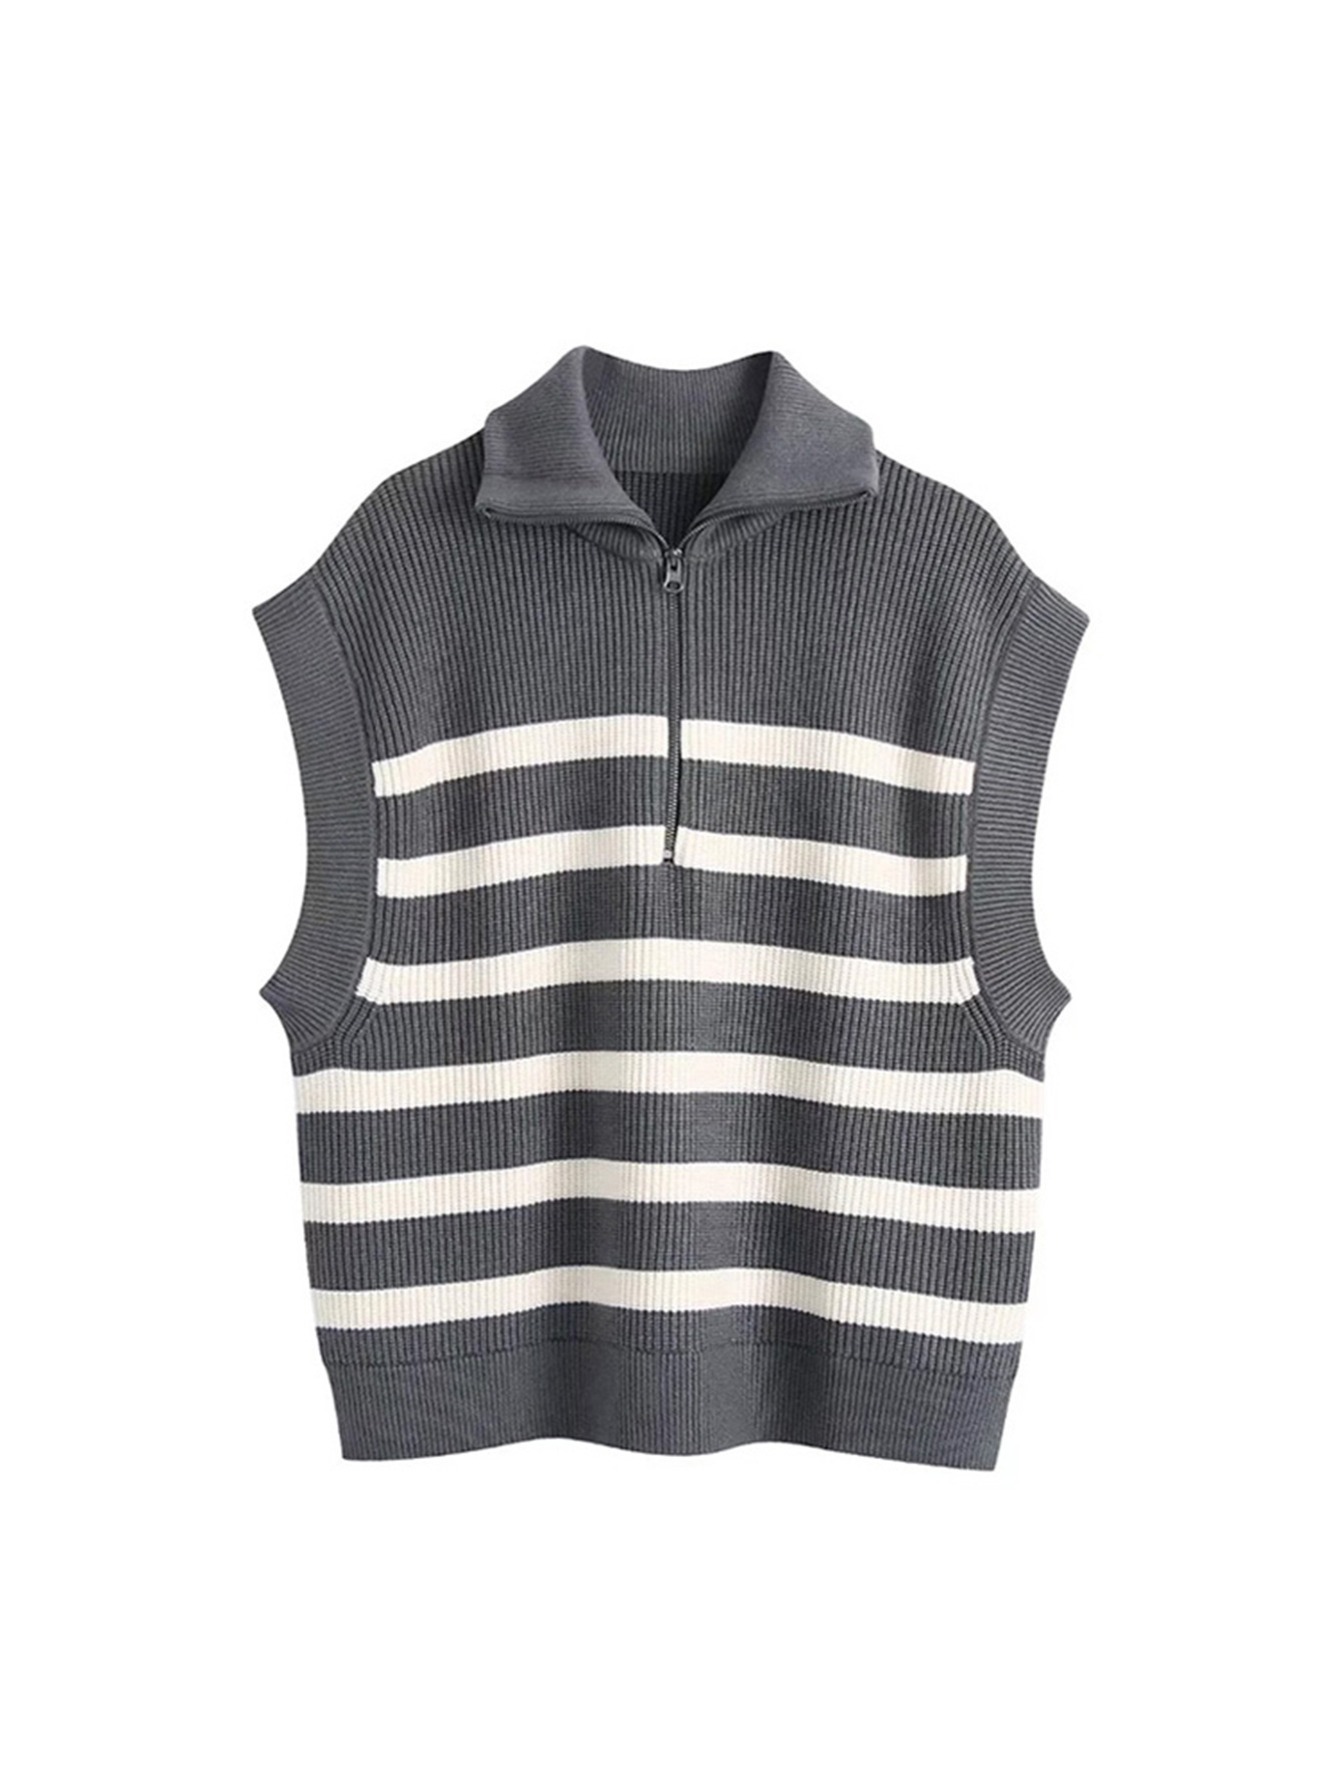 Sweater Vest - Black/striped - Ladies